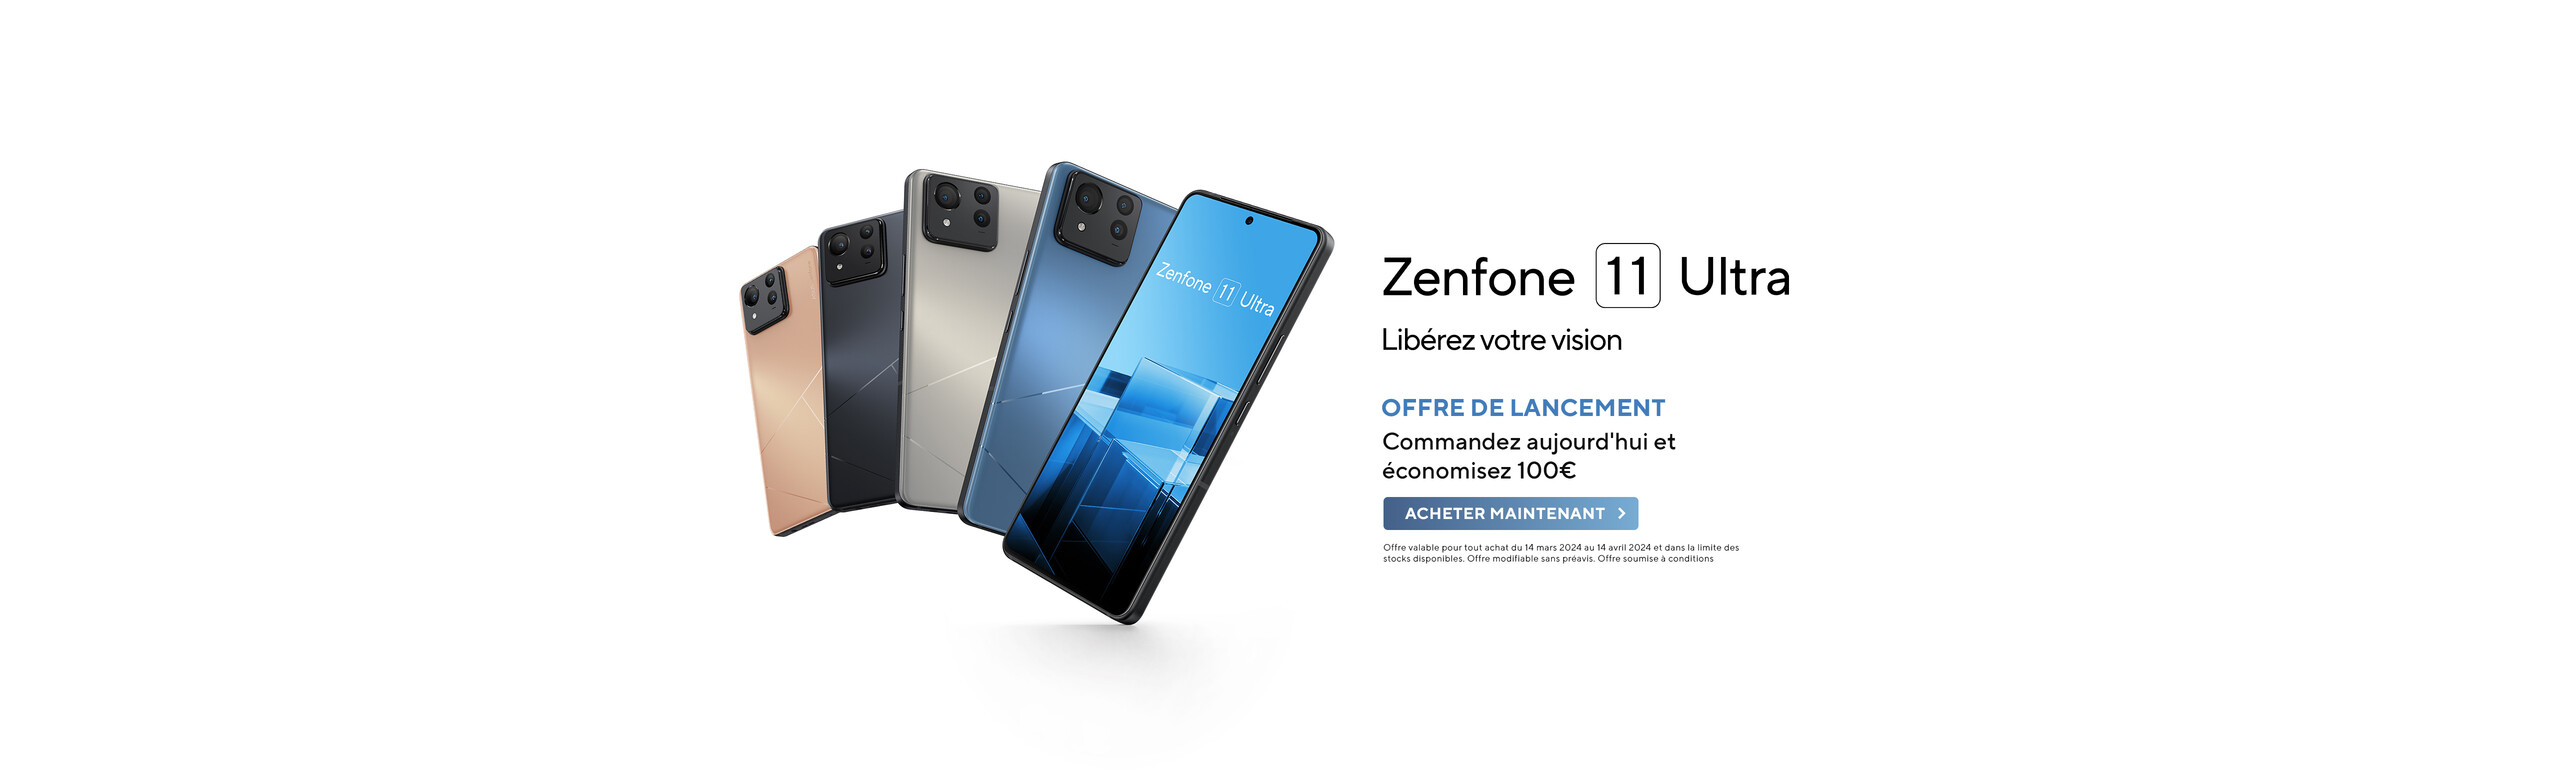 Zenfone-11-Ultra